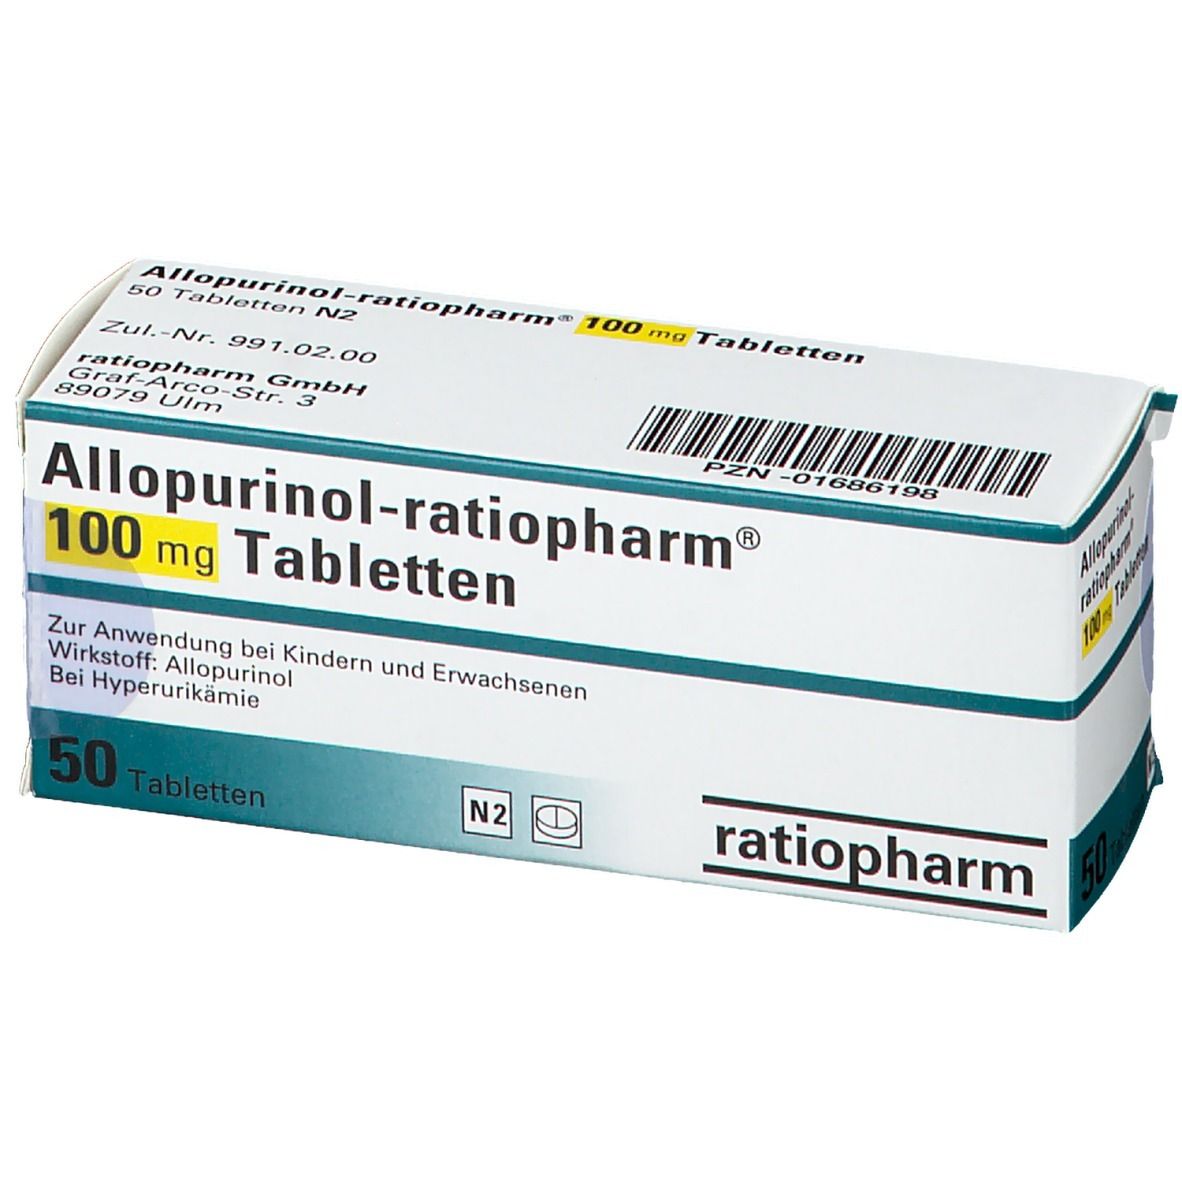 Allopurinol-ratiopharm® 100 mg